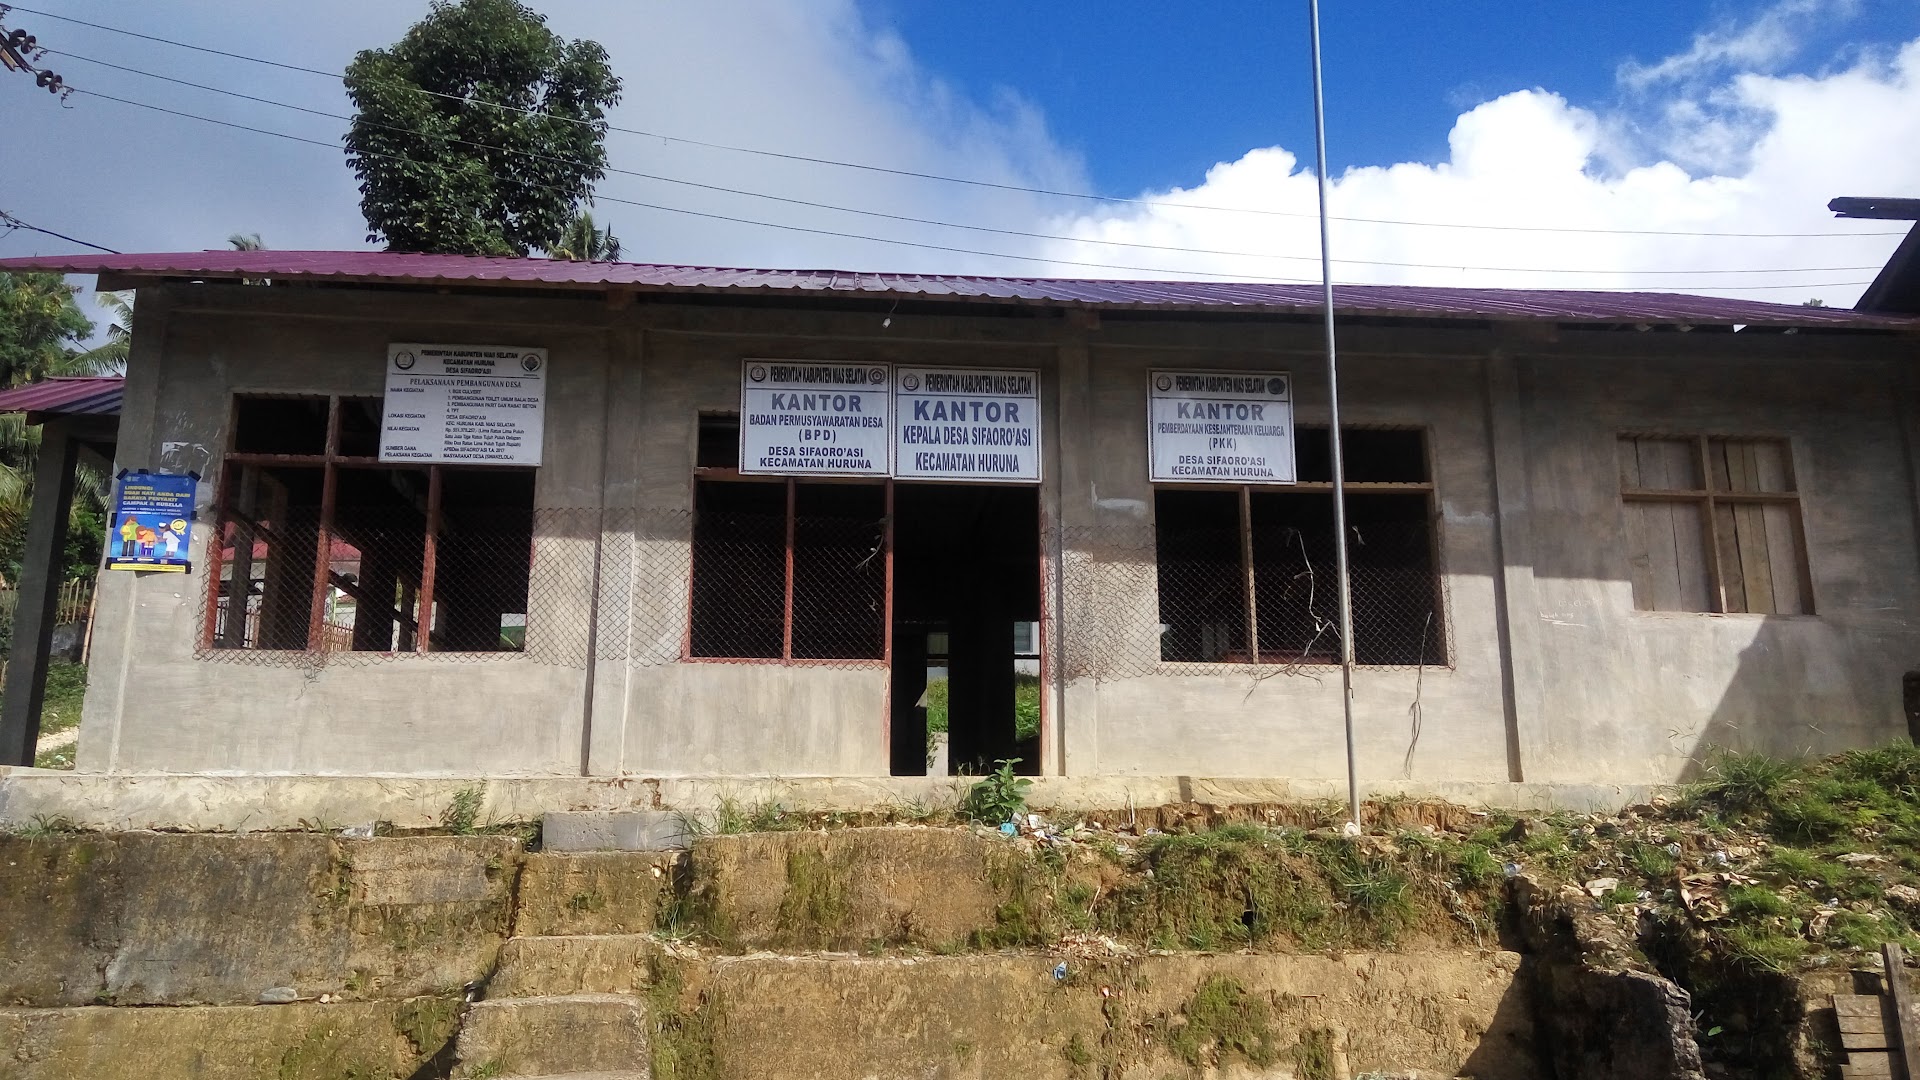 Kantor Kepala Desa Sifaoro'asi Photo